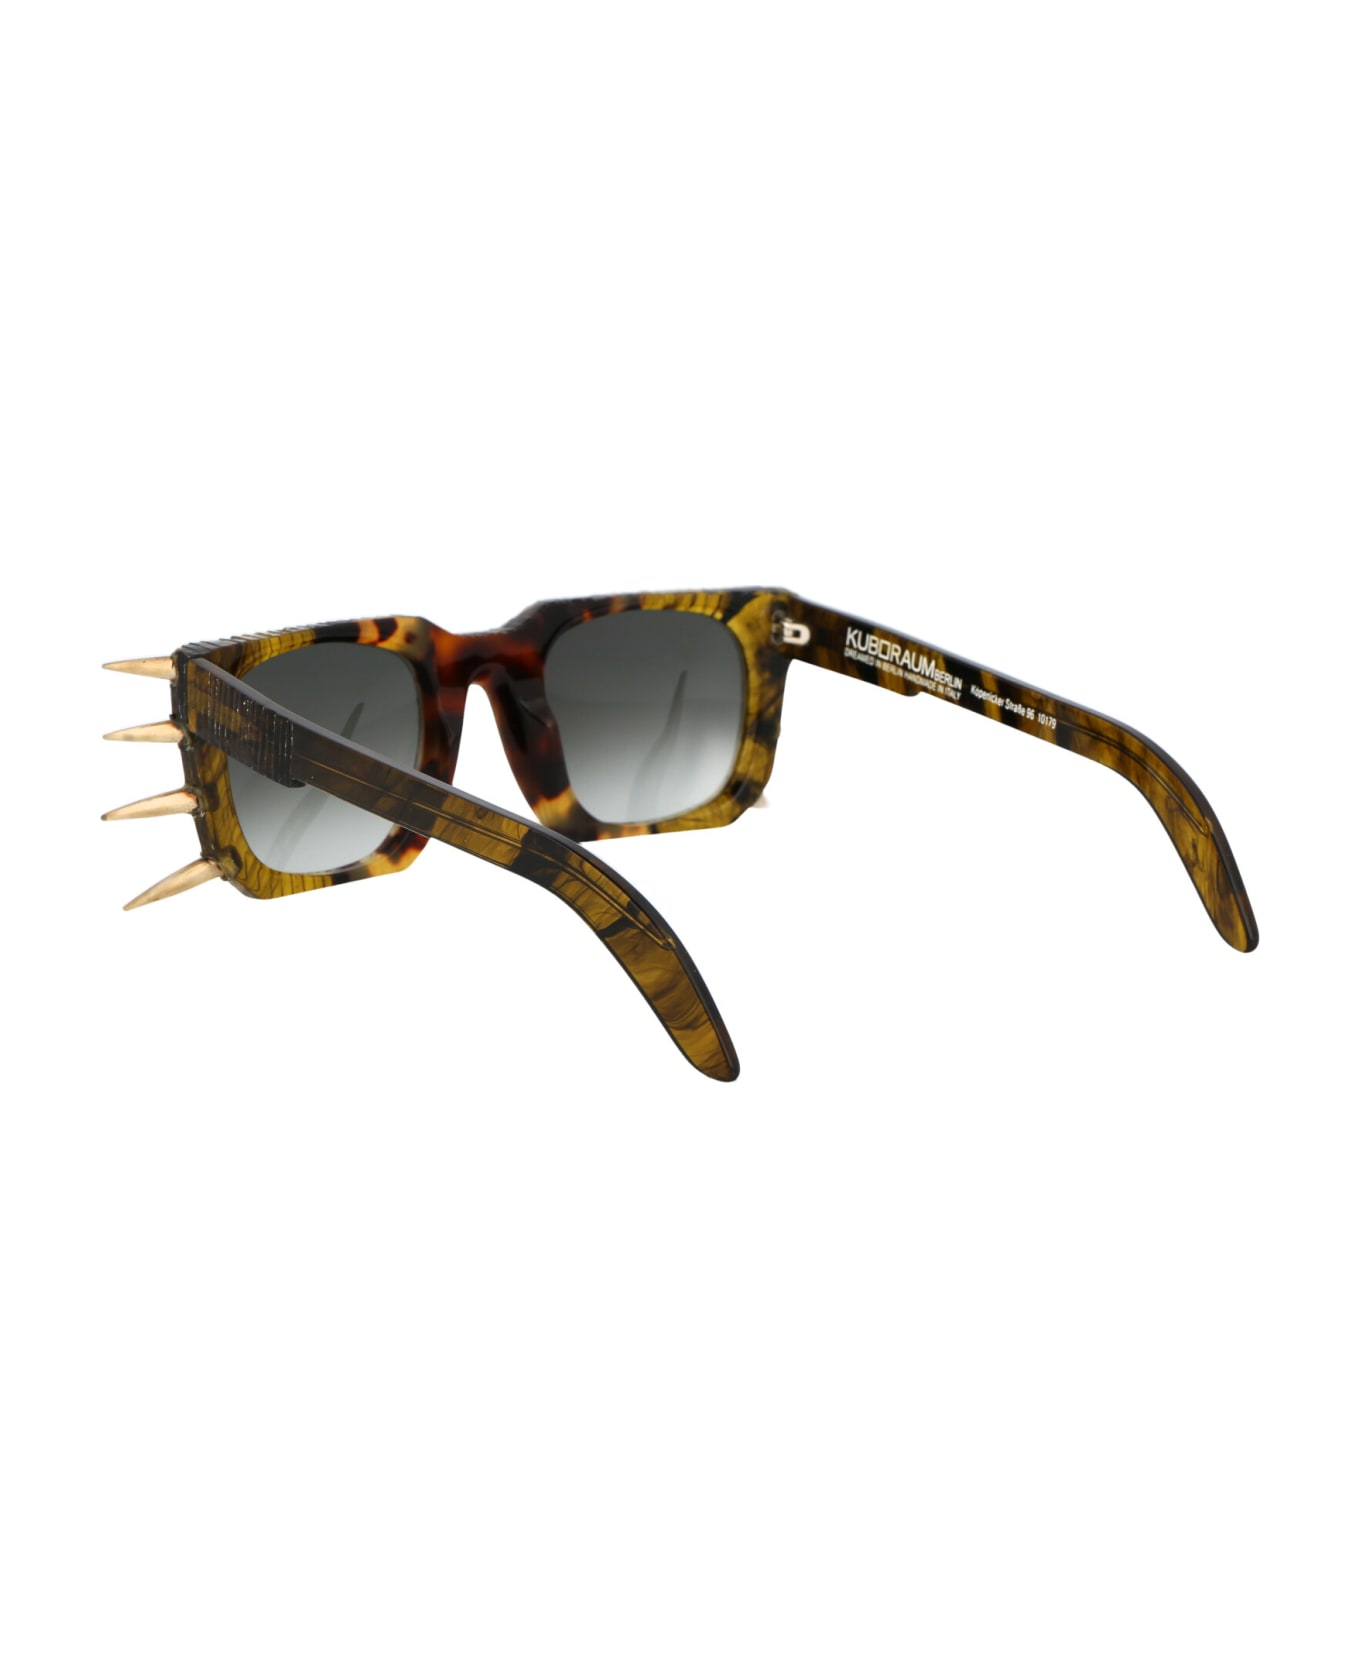 Kuboraum Maske U3 Sunglasses - HH GS MH HAVANA サングラス